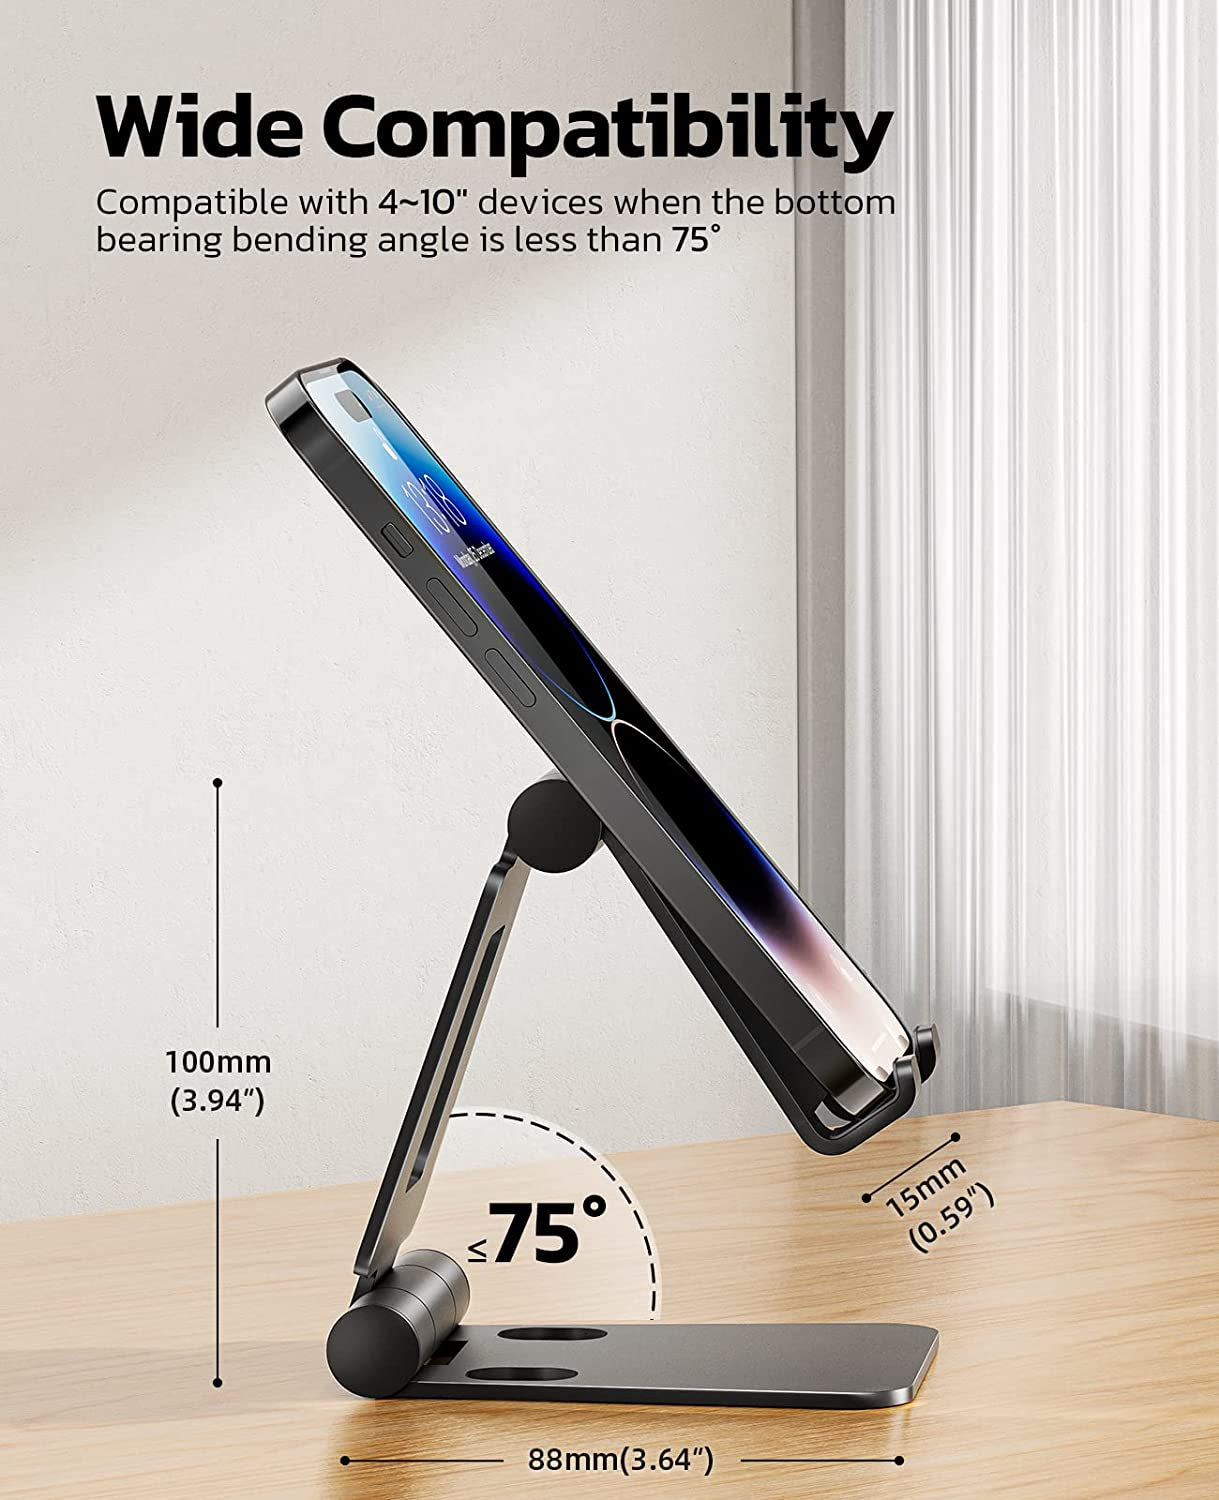 Adjustable Dual Folding Cell Phone Stand: Versatile Foldable Desktop Holder for Phones, Tablets, Nintendo Switch